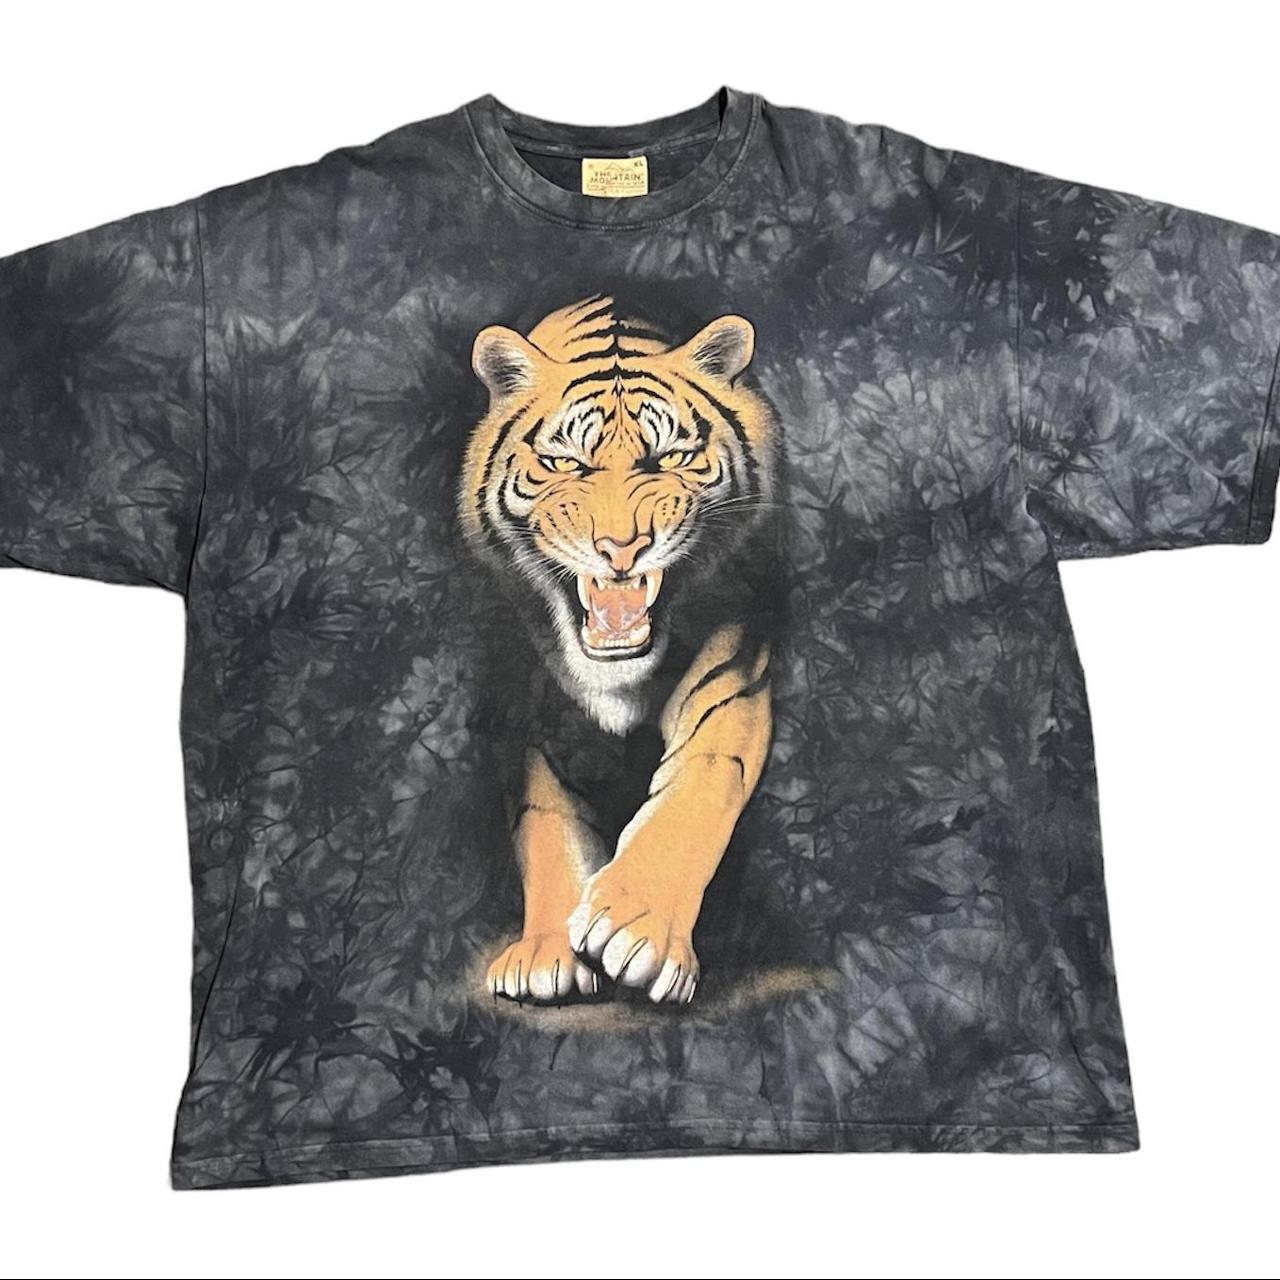 Human Made Tiger t shirt size xl fits like a large - Depop